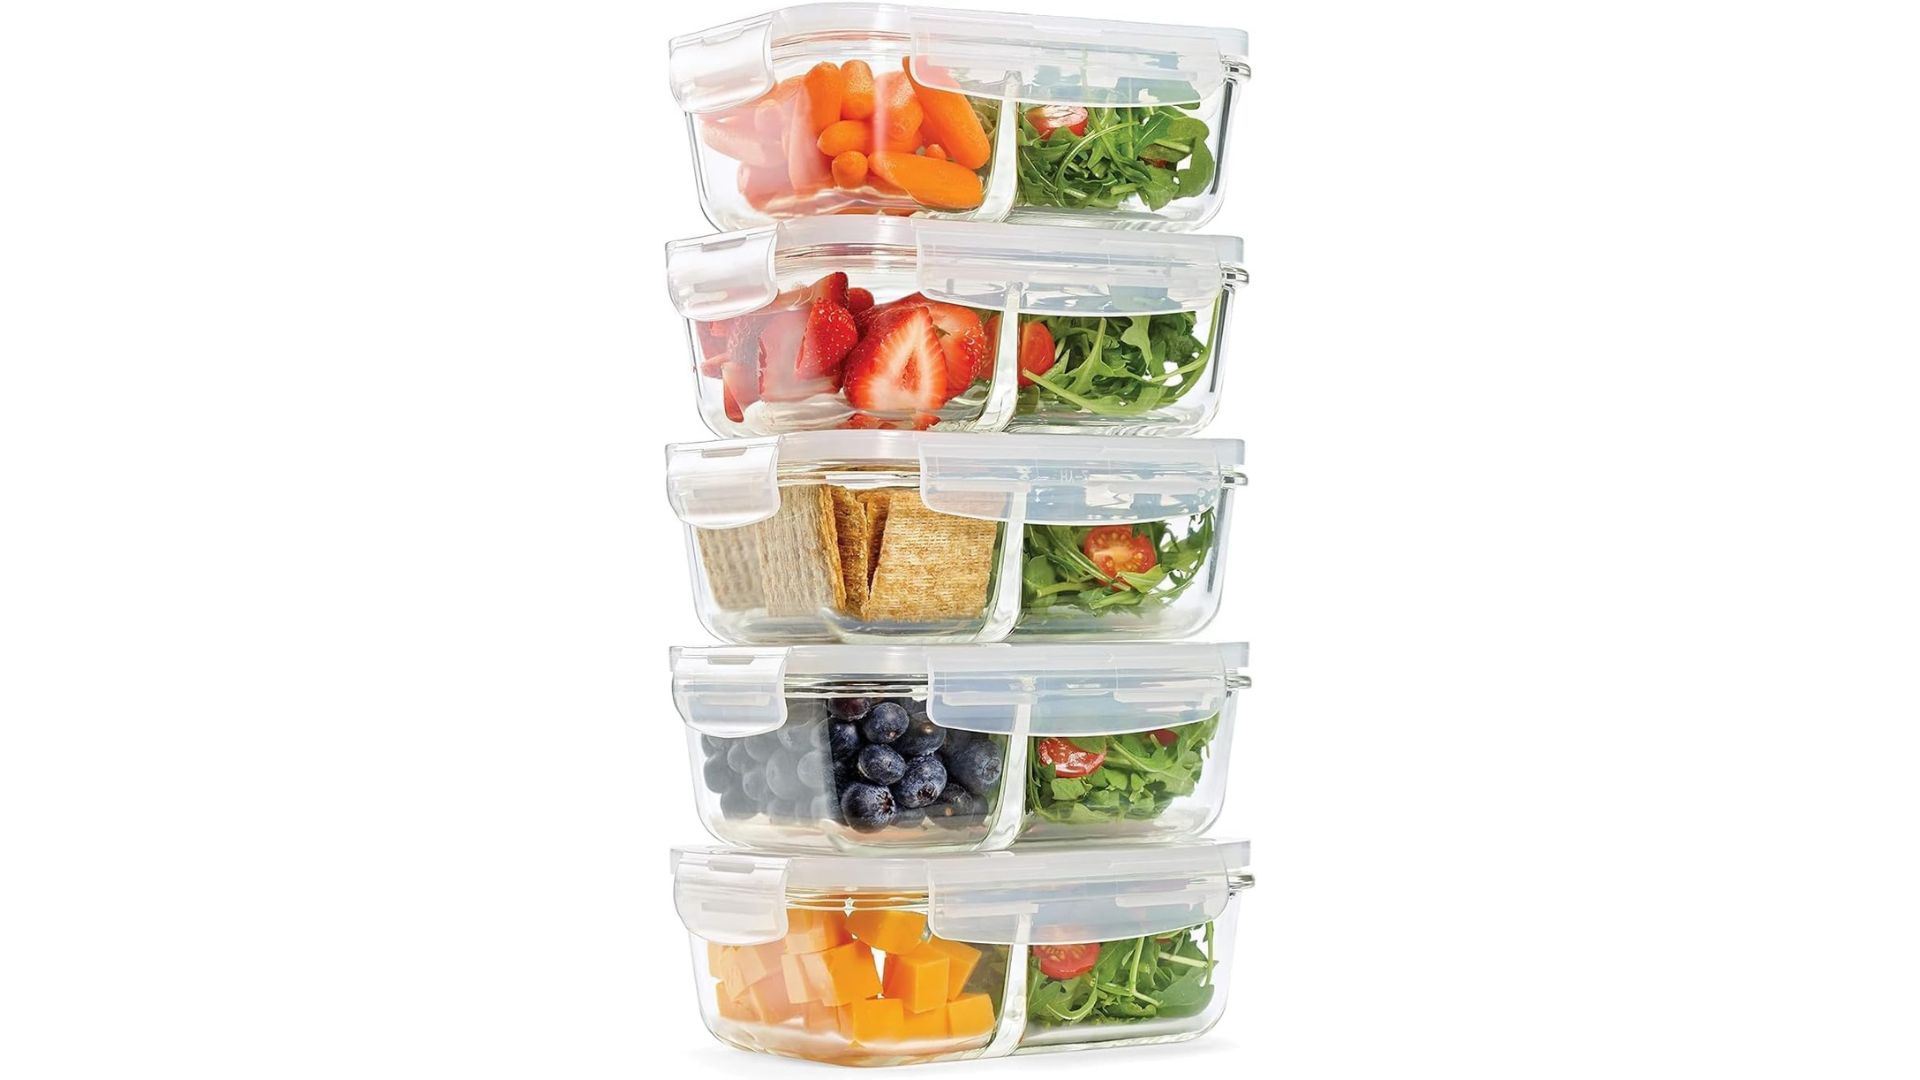 Best fridge organizers: PrepNaturals Glass Food Containers 